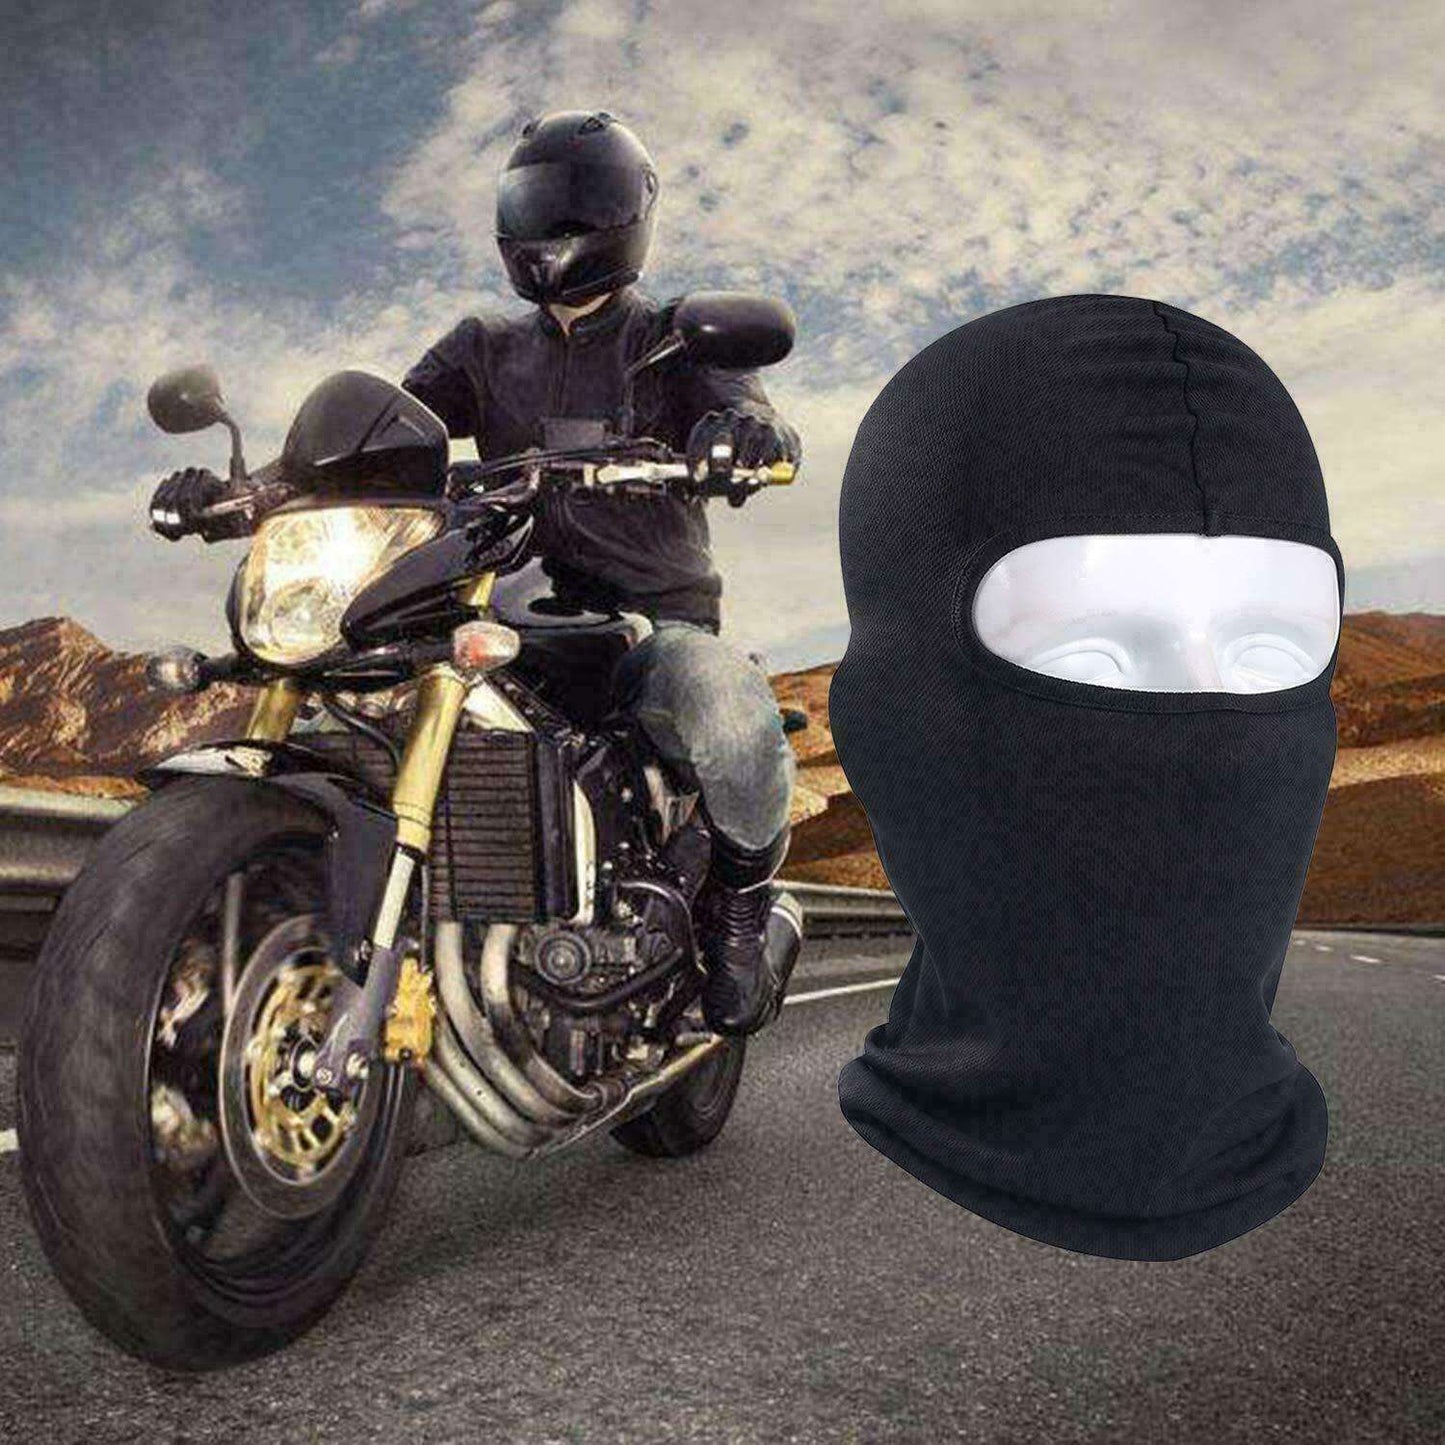 Lightweight Motorcycle Warmer Black Ski Mask Set for All Seasons